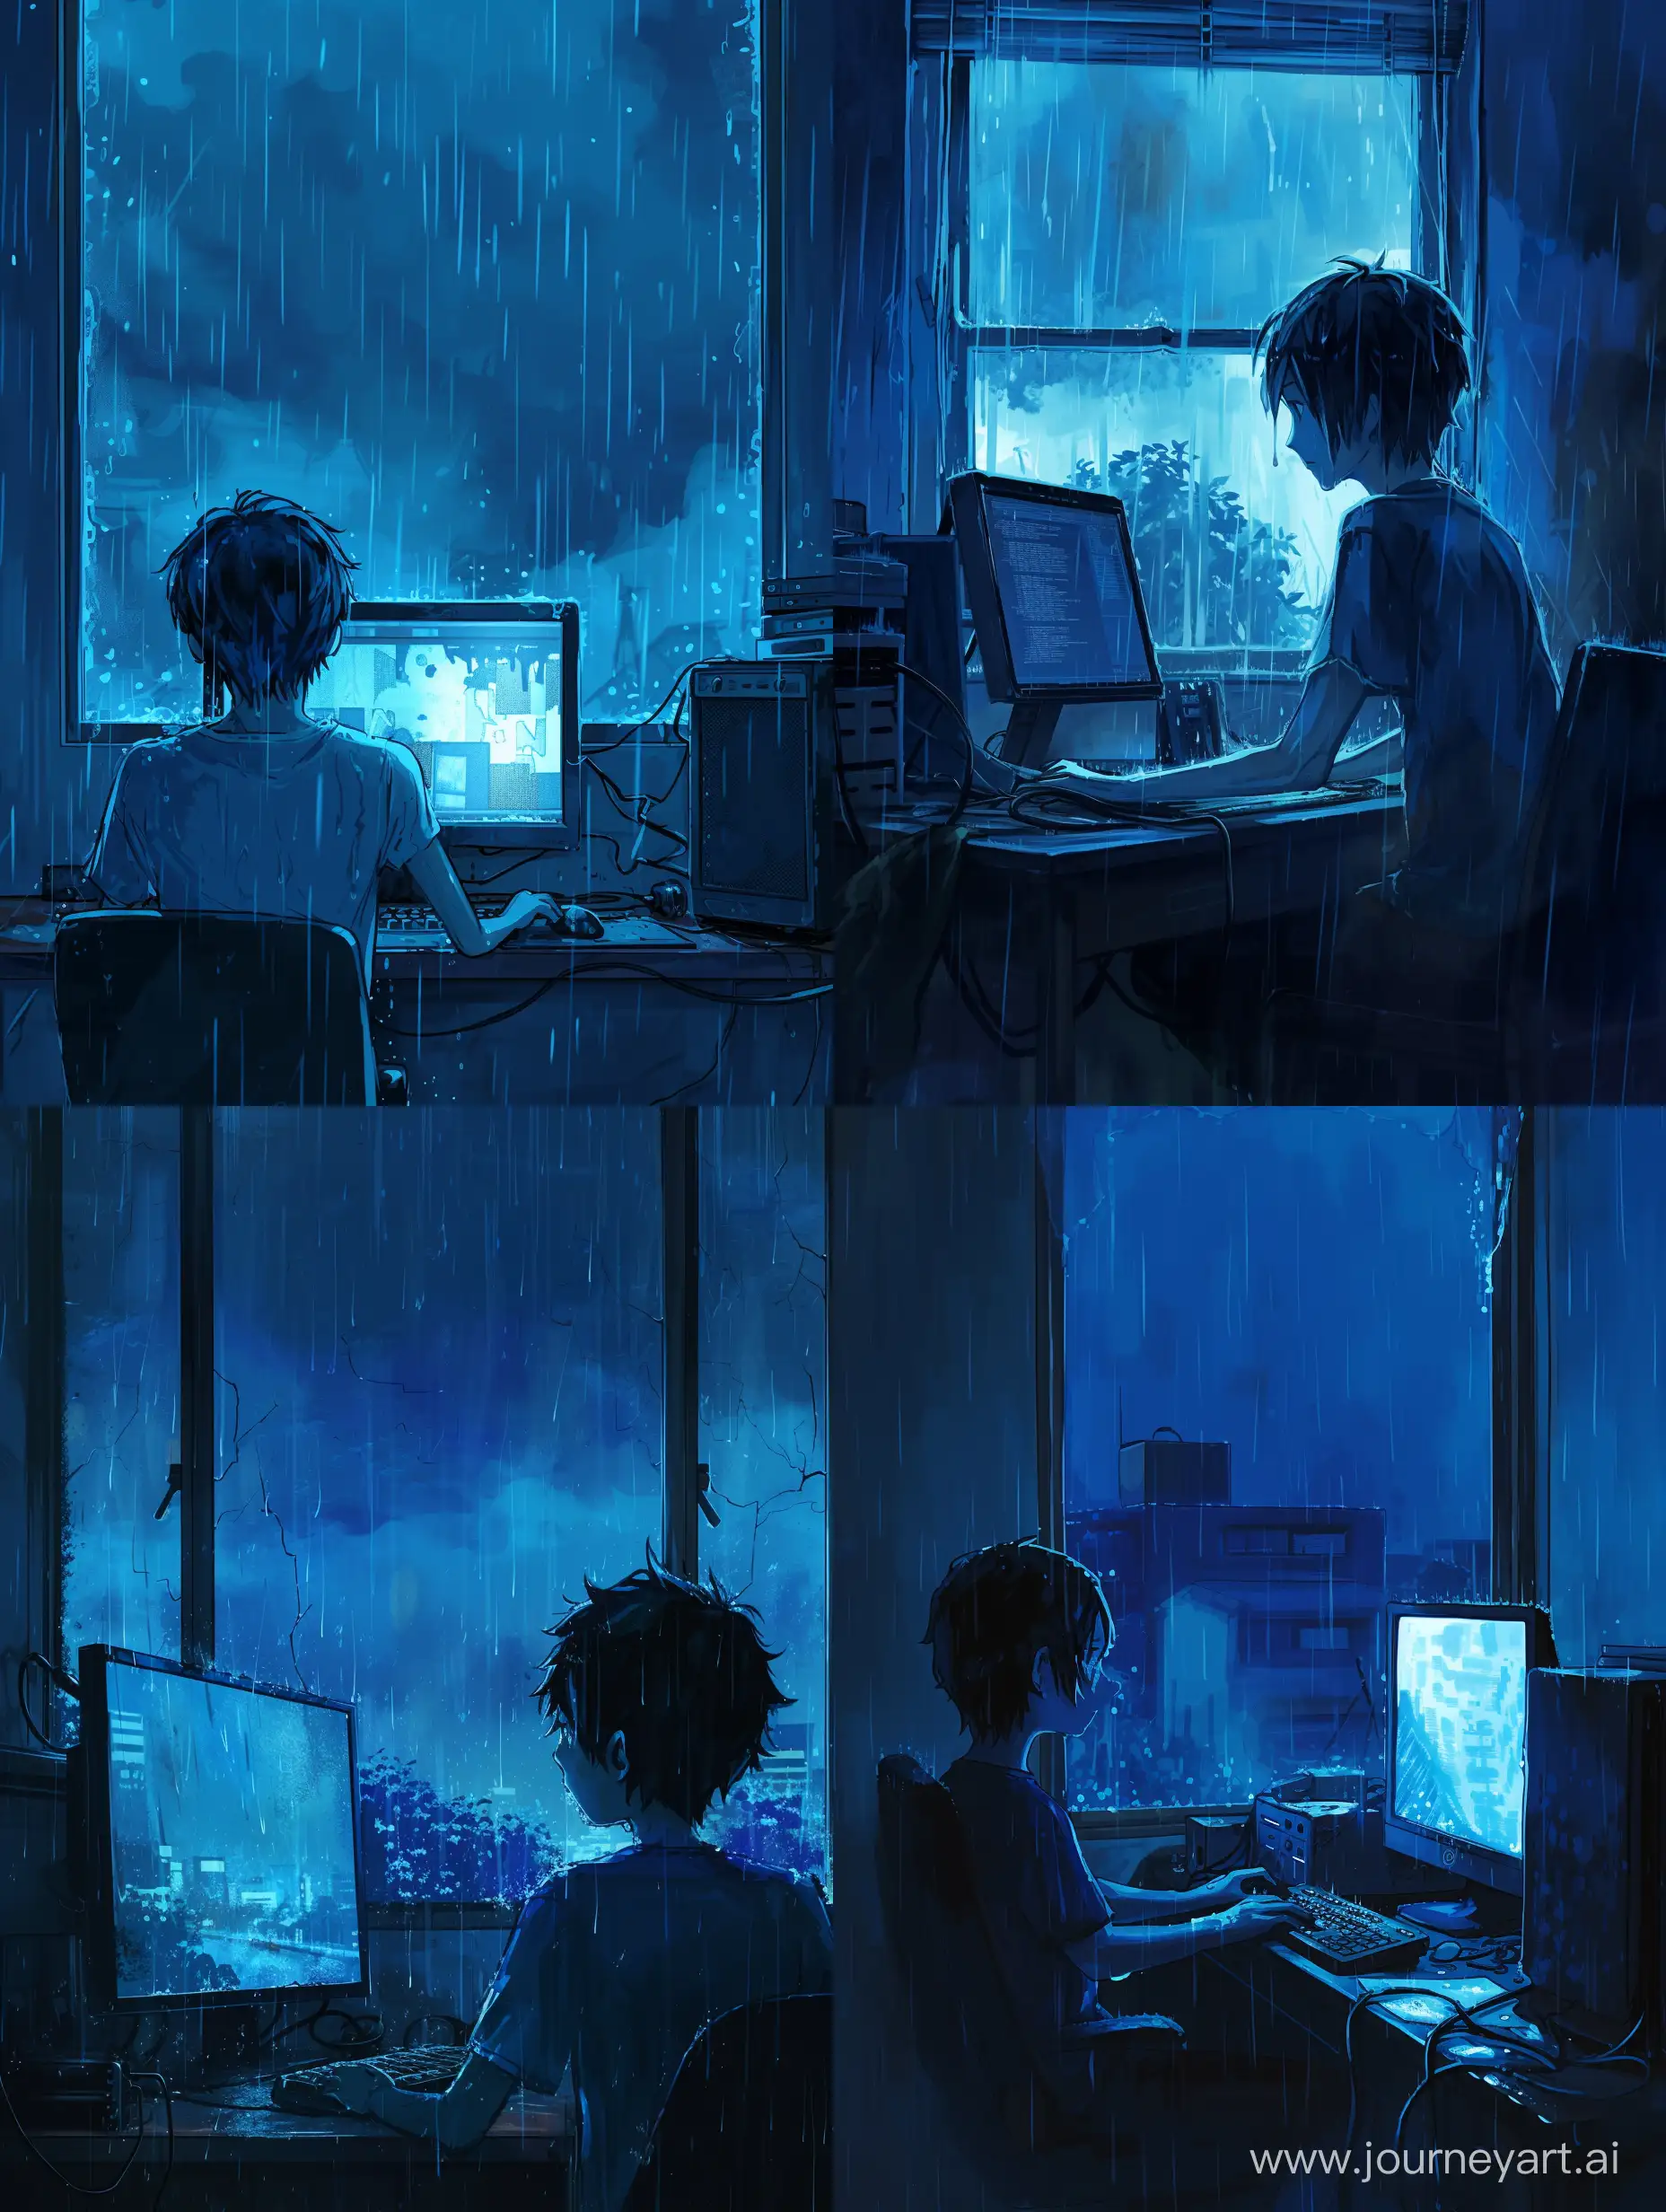 Melancholic-Anime-Scene-16YearOld-Boy-in-Despair-with-Computer-in-Rainy-Room